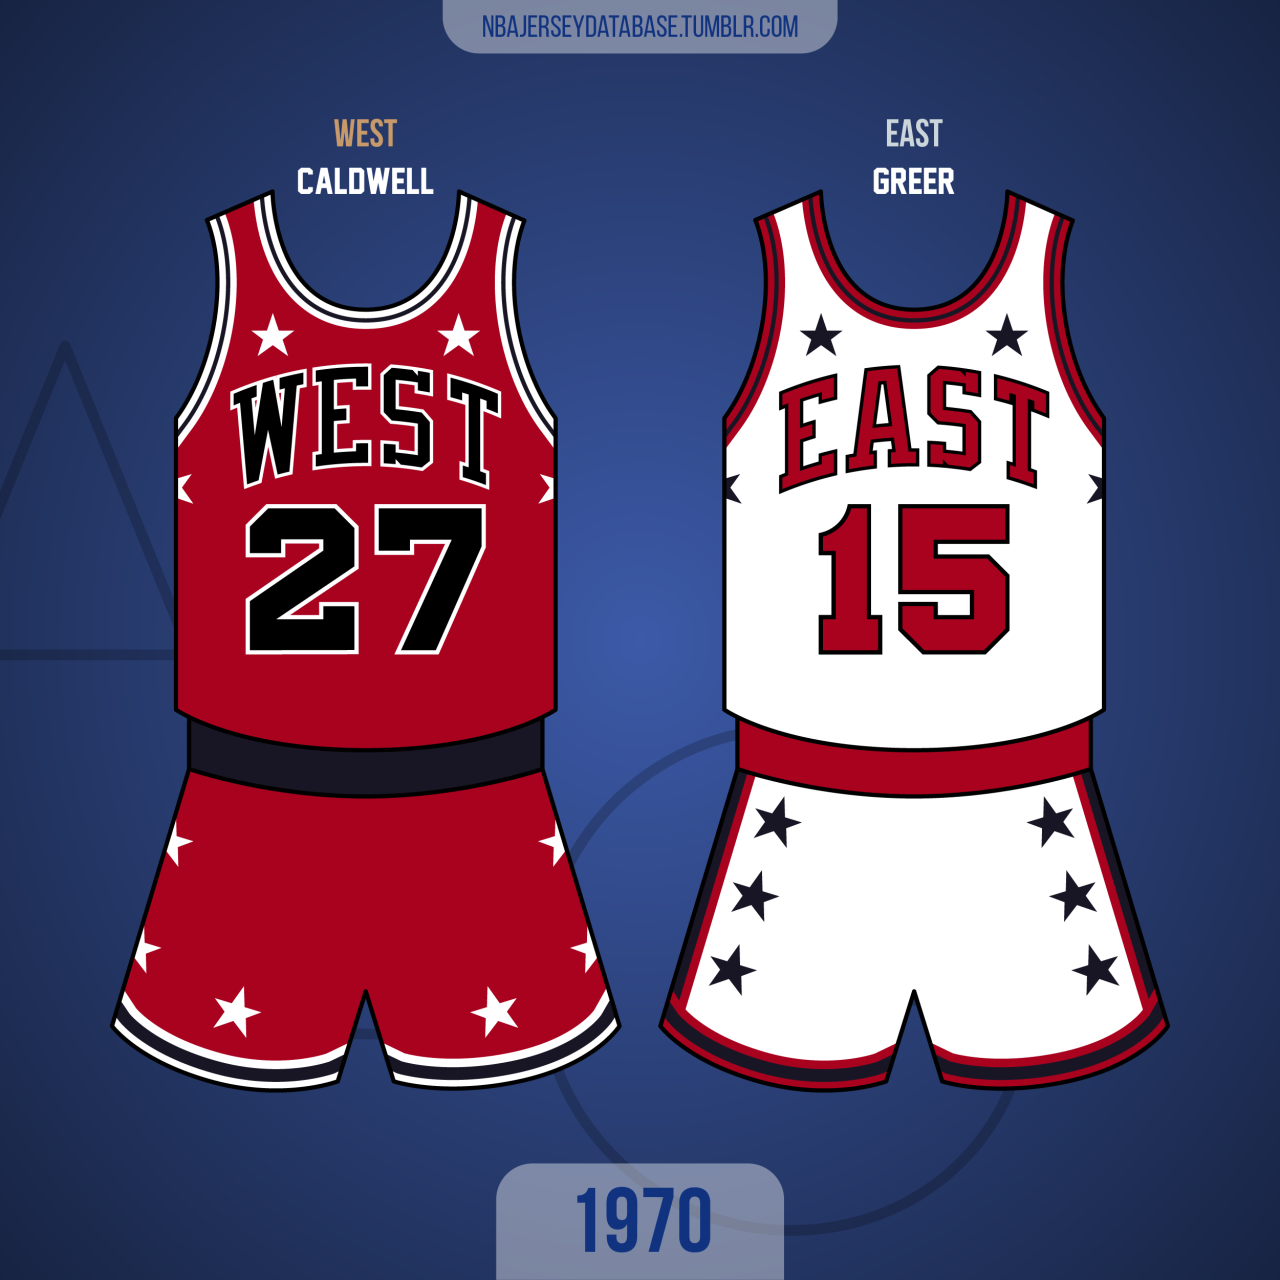 NBA Jersey Database, 1994 NBA All-Star GameTarget Center East 127 